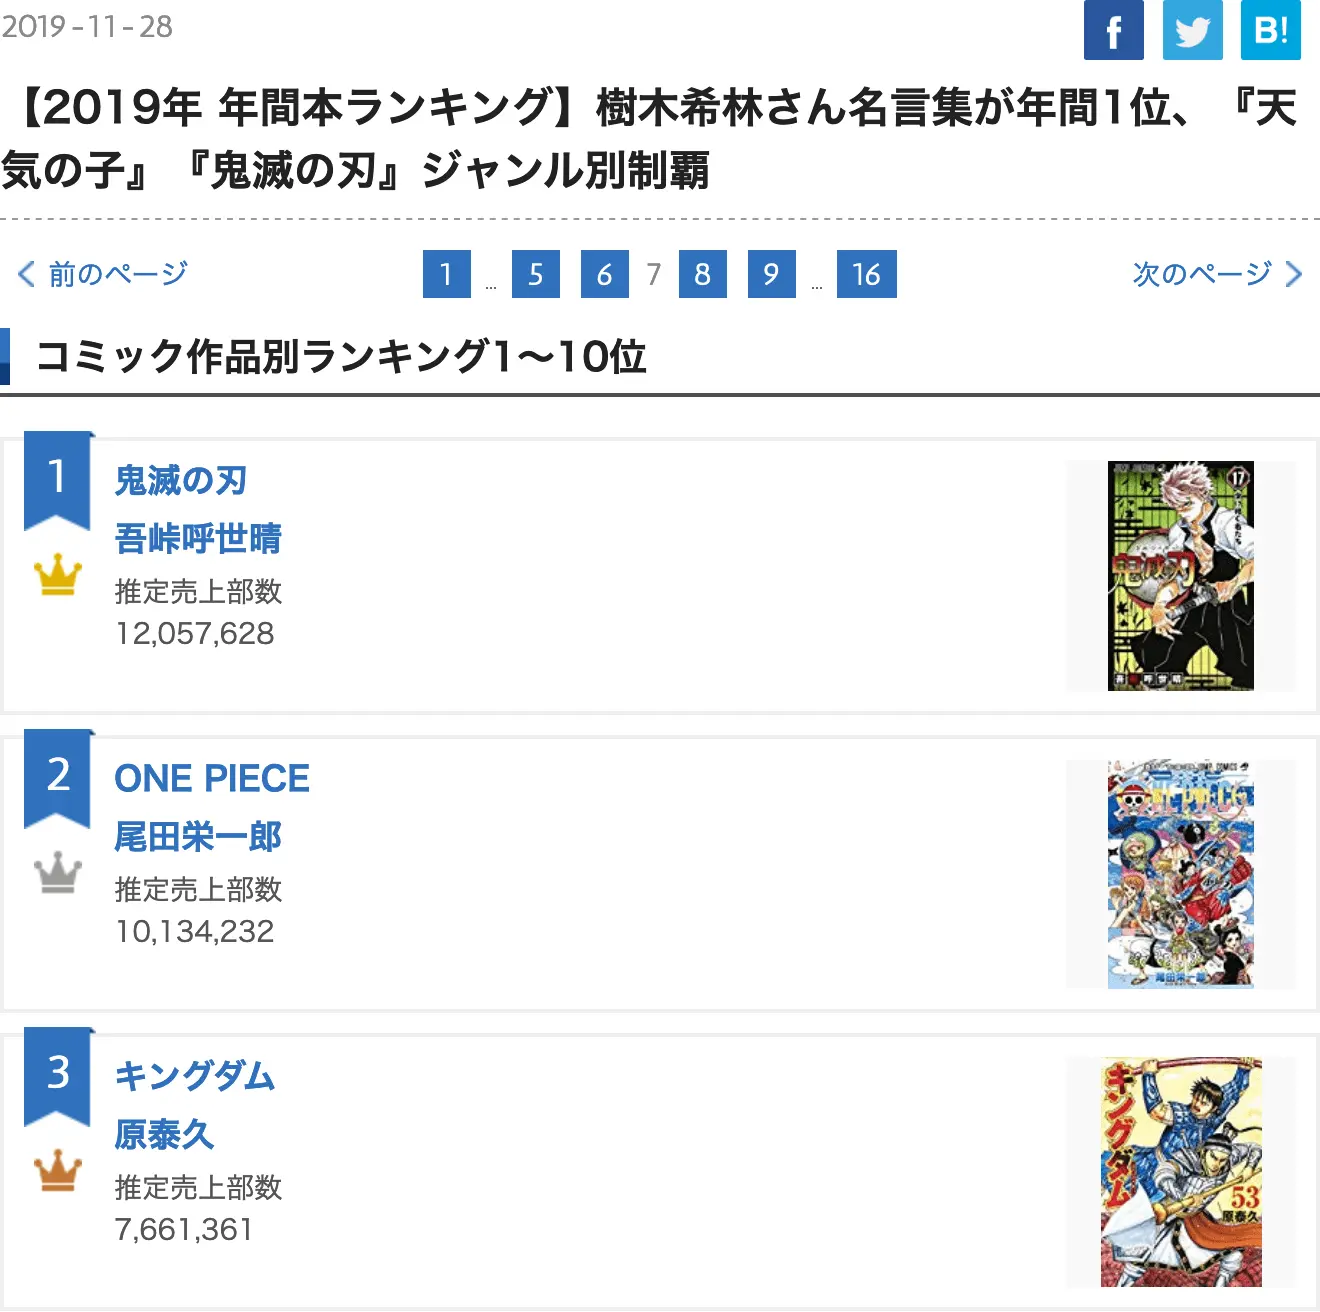 Oricon 2019 漫画销量年榜